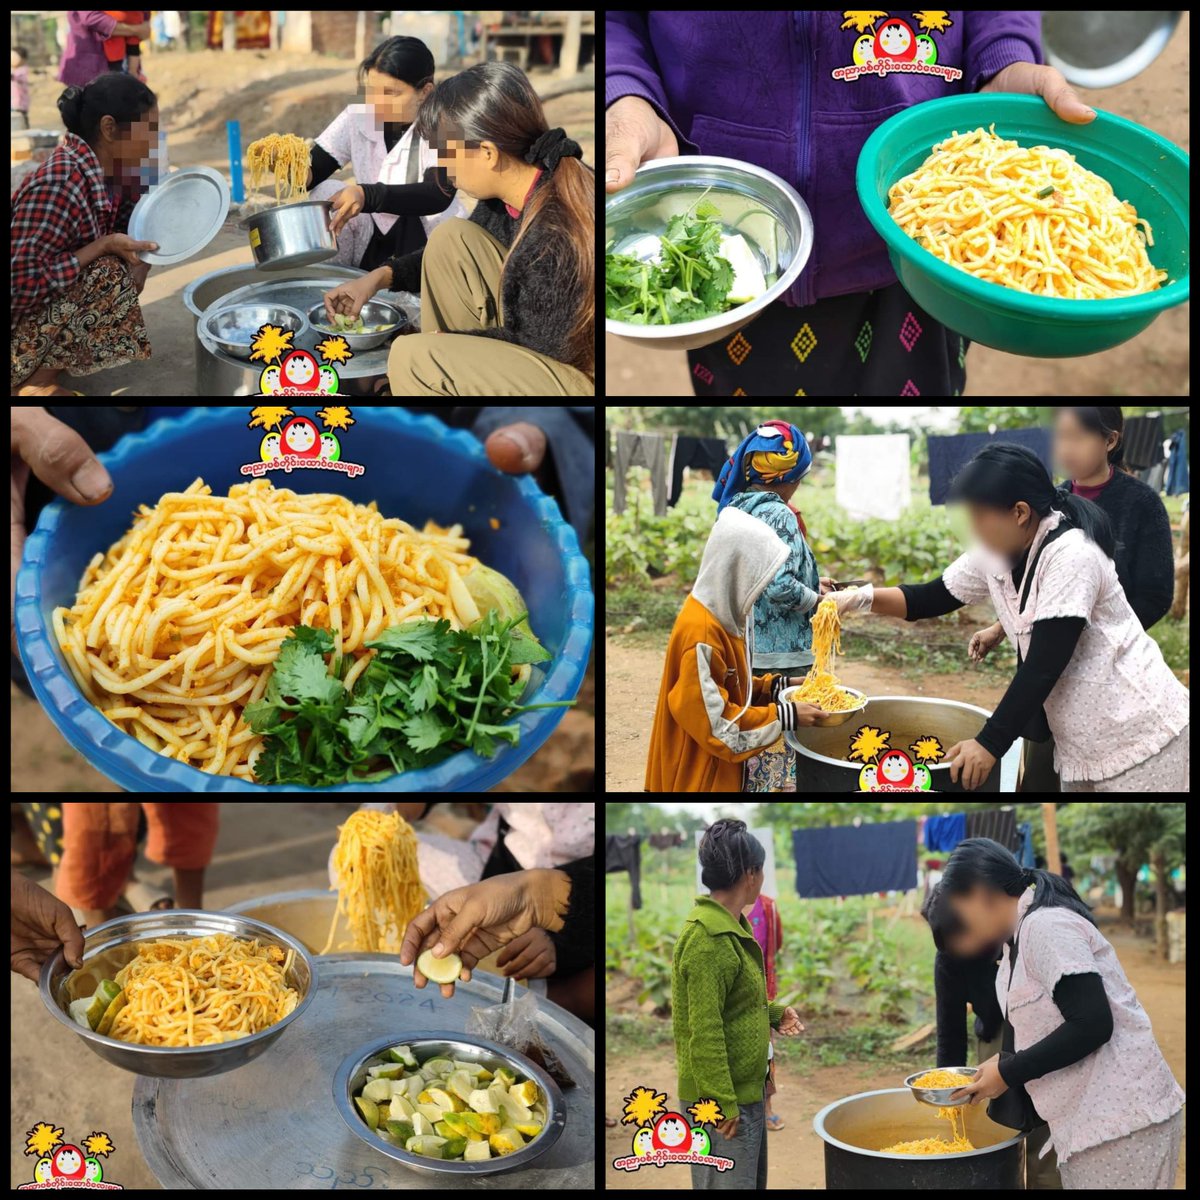 #AnyarPyitTaiHtaungLayMyar (Anyar Chubby Kids)Group had treated Moteti salad for breakfast to the IDPs in Salingyi Twp of Sagaing Div on Dec29.
#2023Dec30Coup
#HelpMyanmarIDPs
#WhatsHappeningInMyanmar